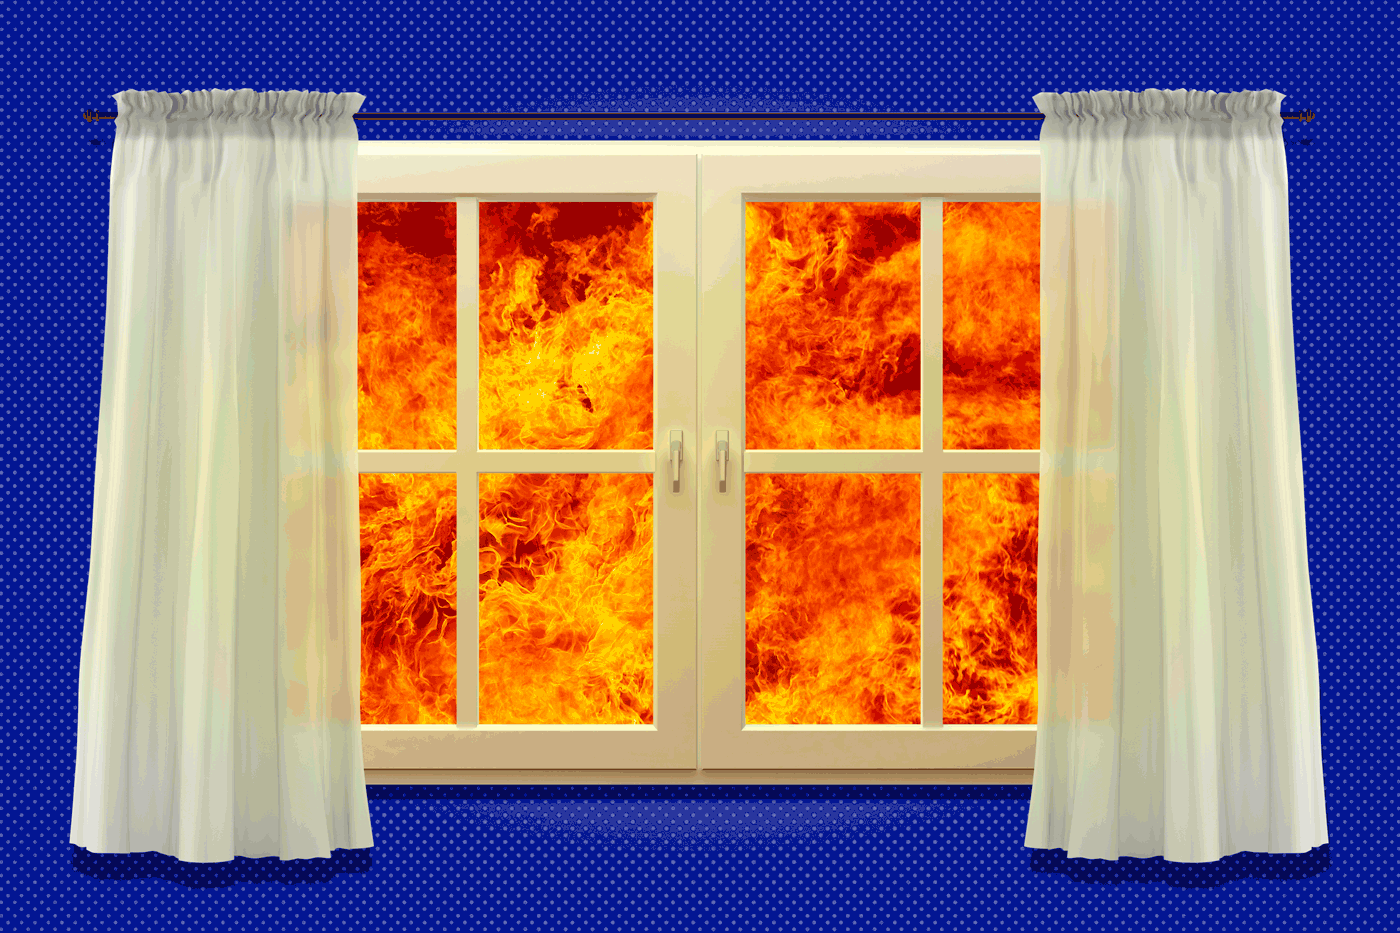 Fire window illustration